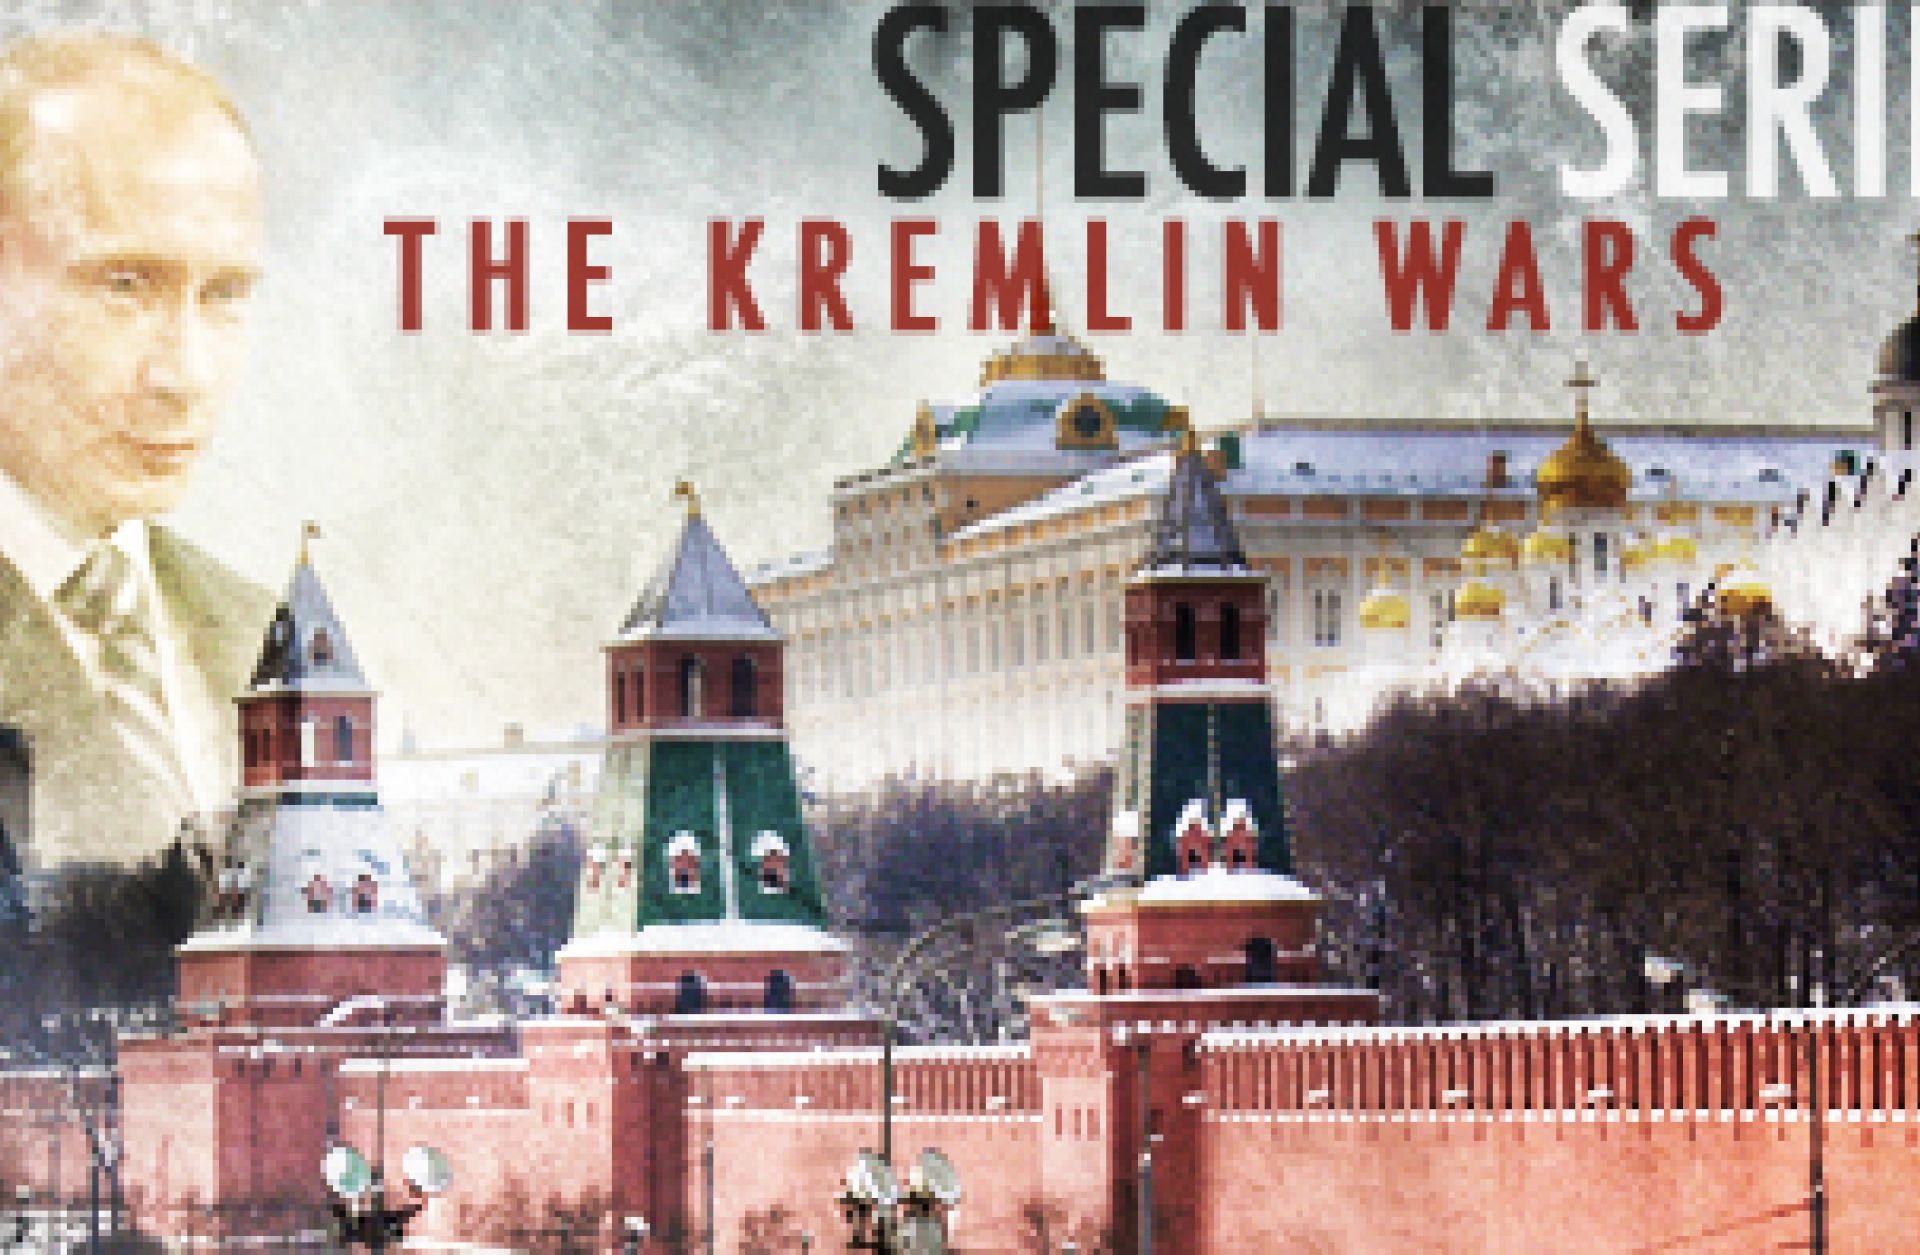 The kremlin is the heart. Козырев Kremlin. The Kremlin подпись.